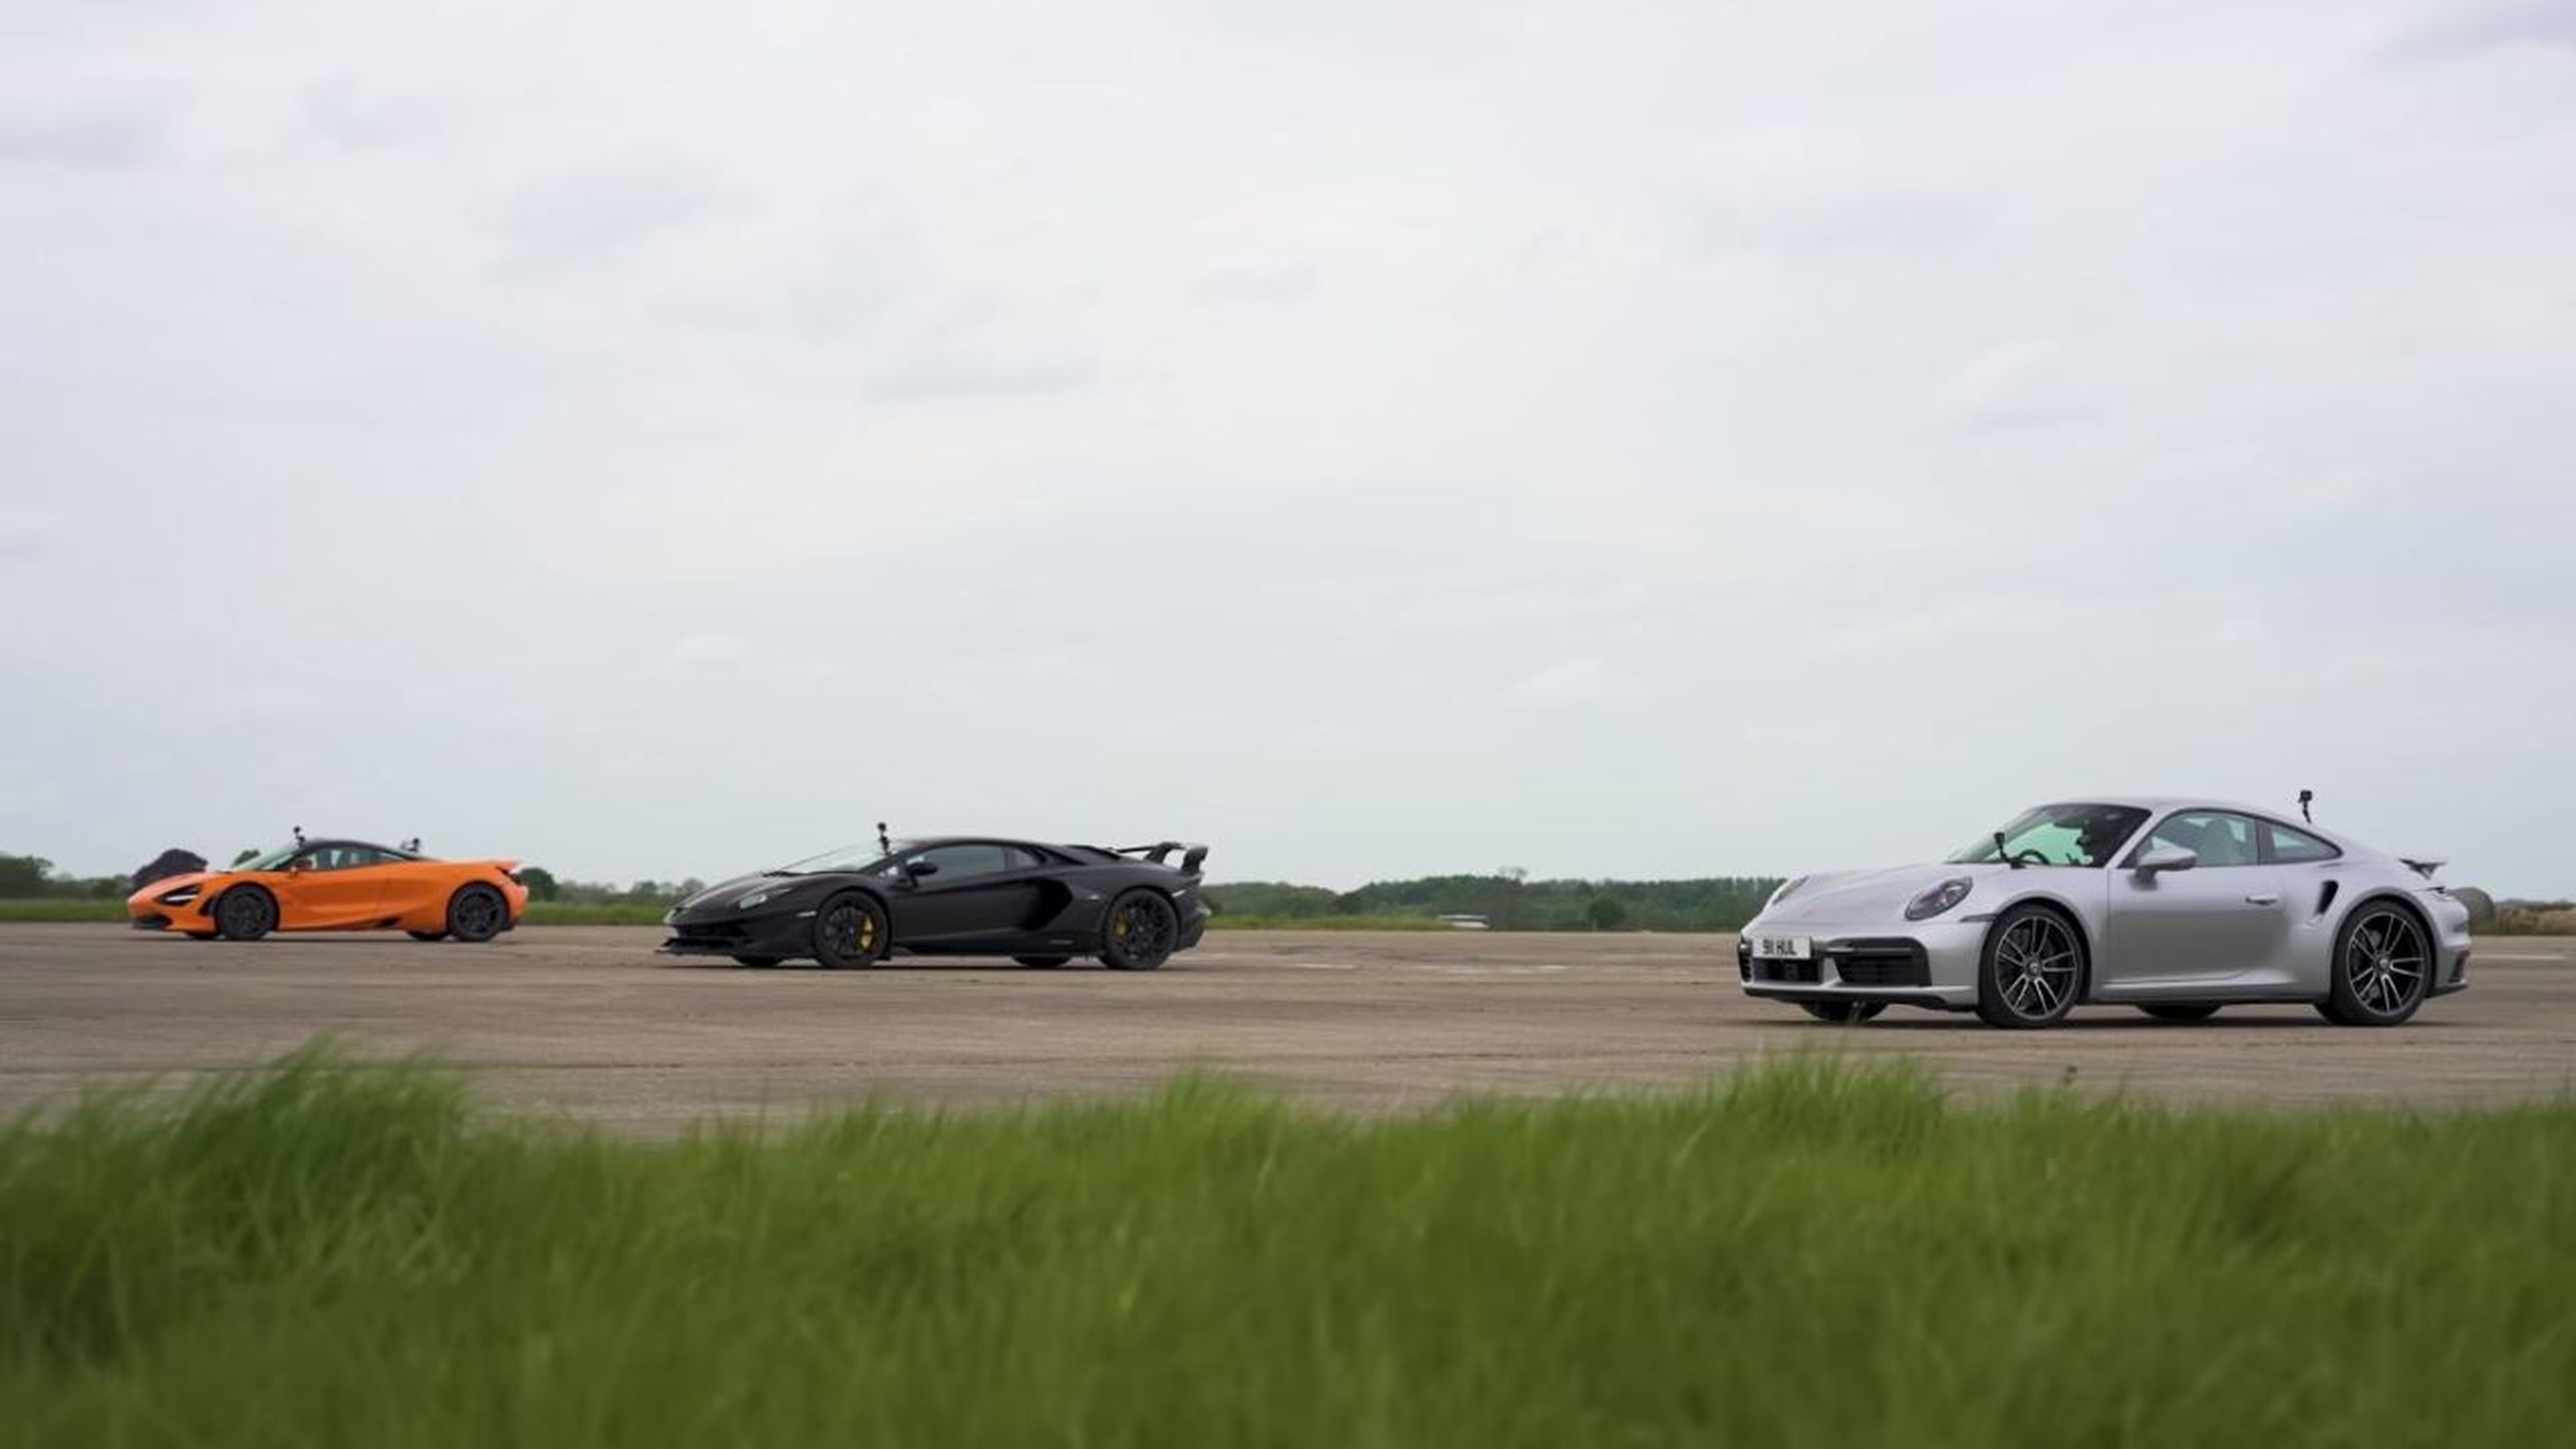 Lamborghini Aventador SVJ vs McLaren 720S vs Porsche 911 Turbo S